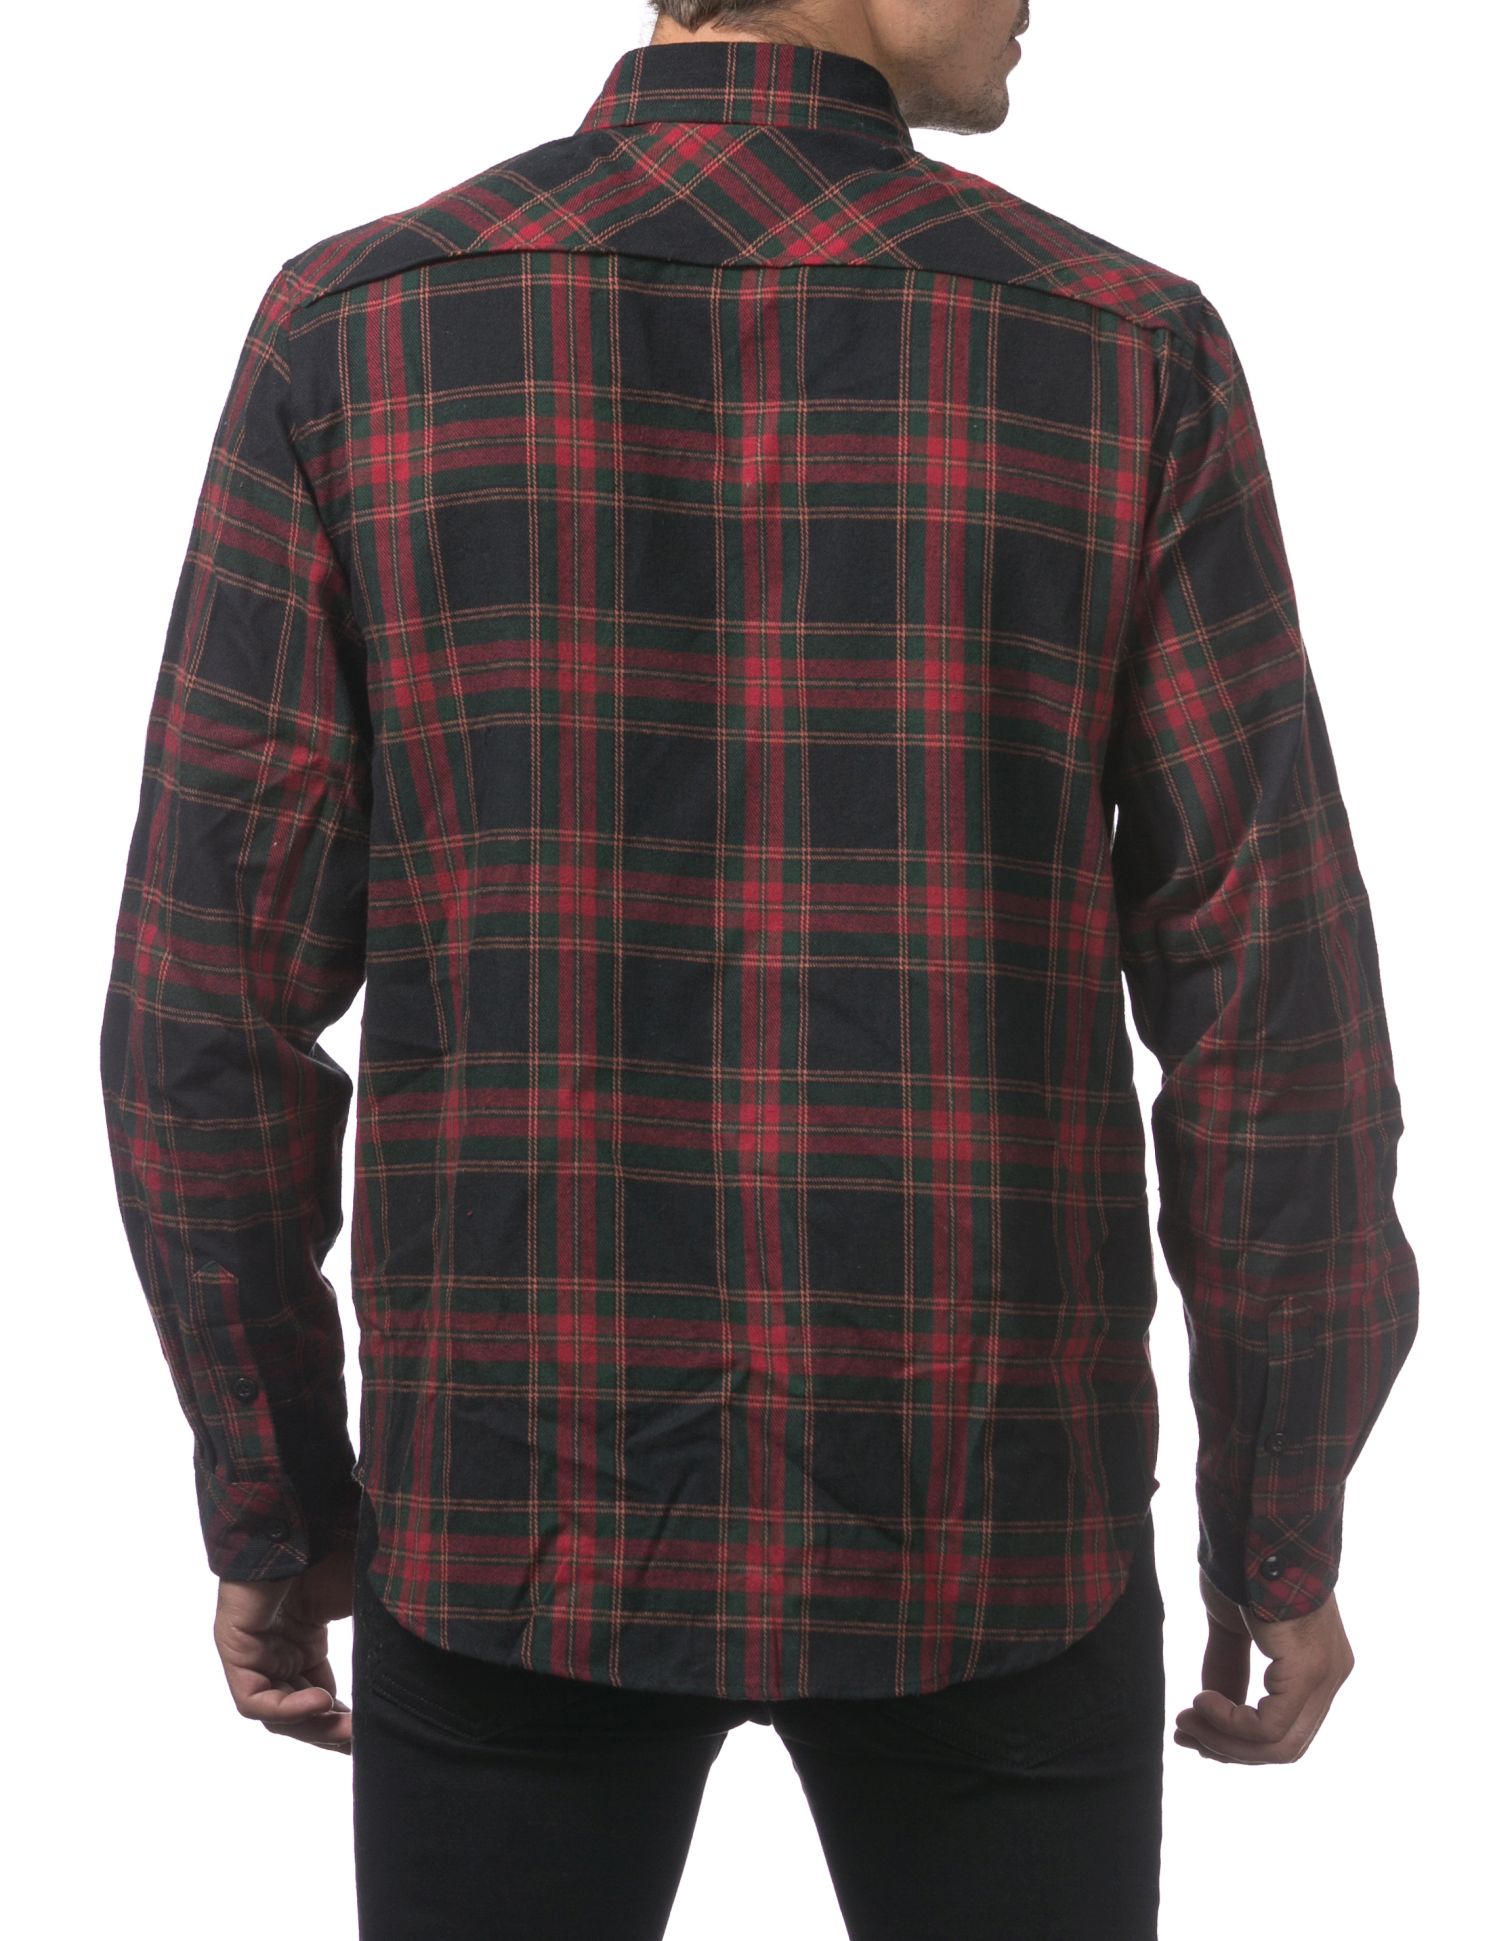 151 #3)BUG/RED/D.GRN Plaid Flannel Long Sleeve Shirt - Mens